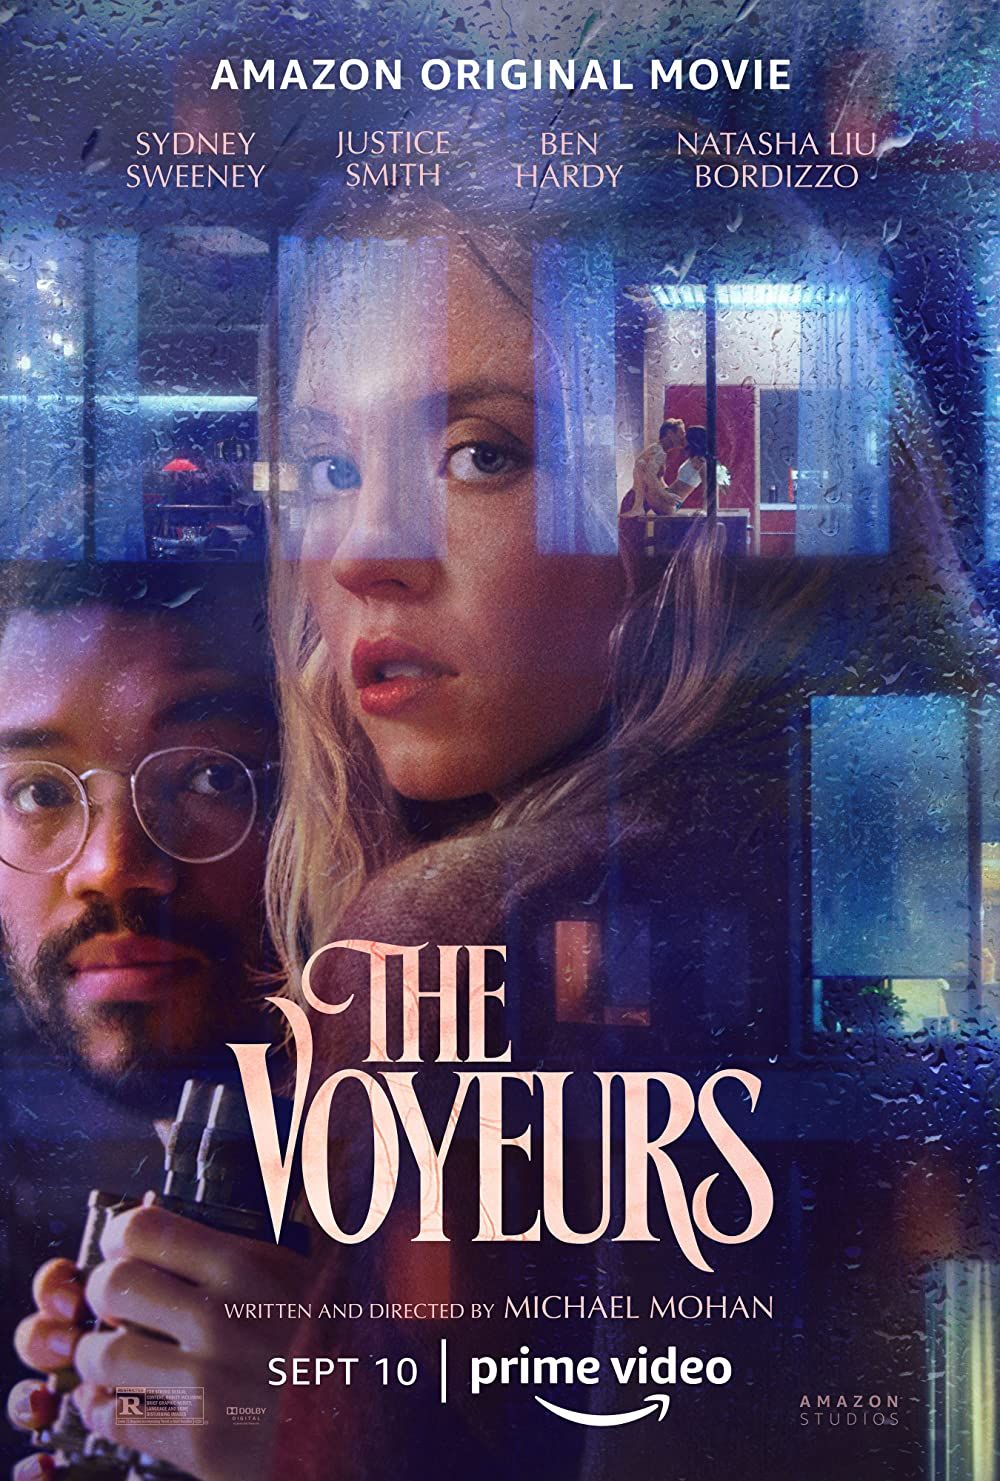 18+ The Voyeurs (2021) English HDRip download full movie